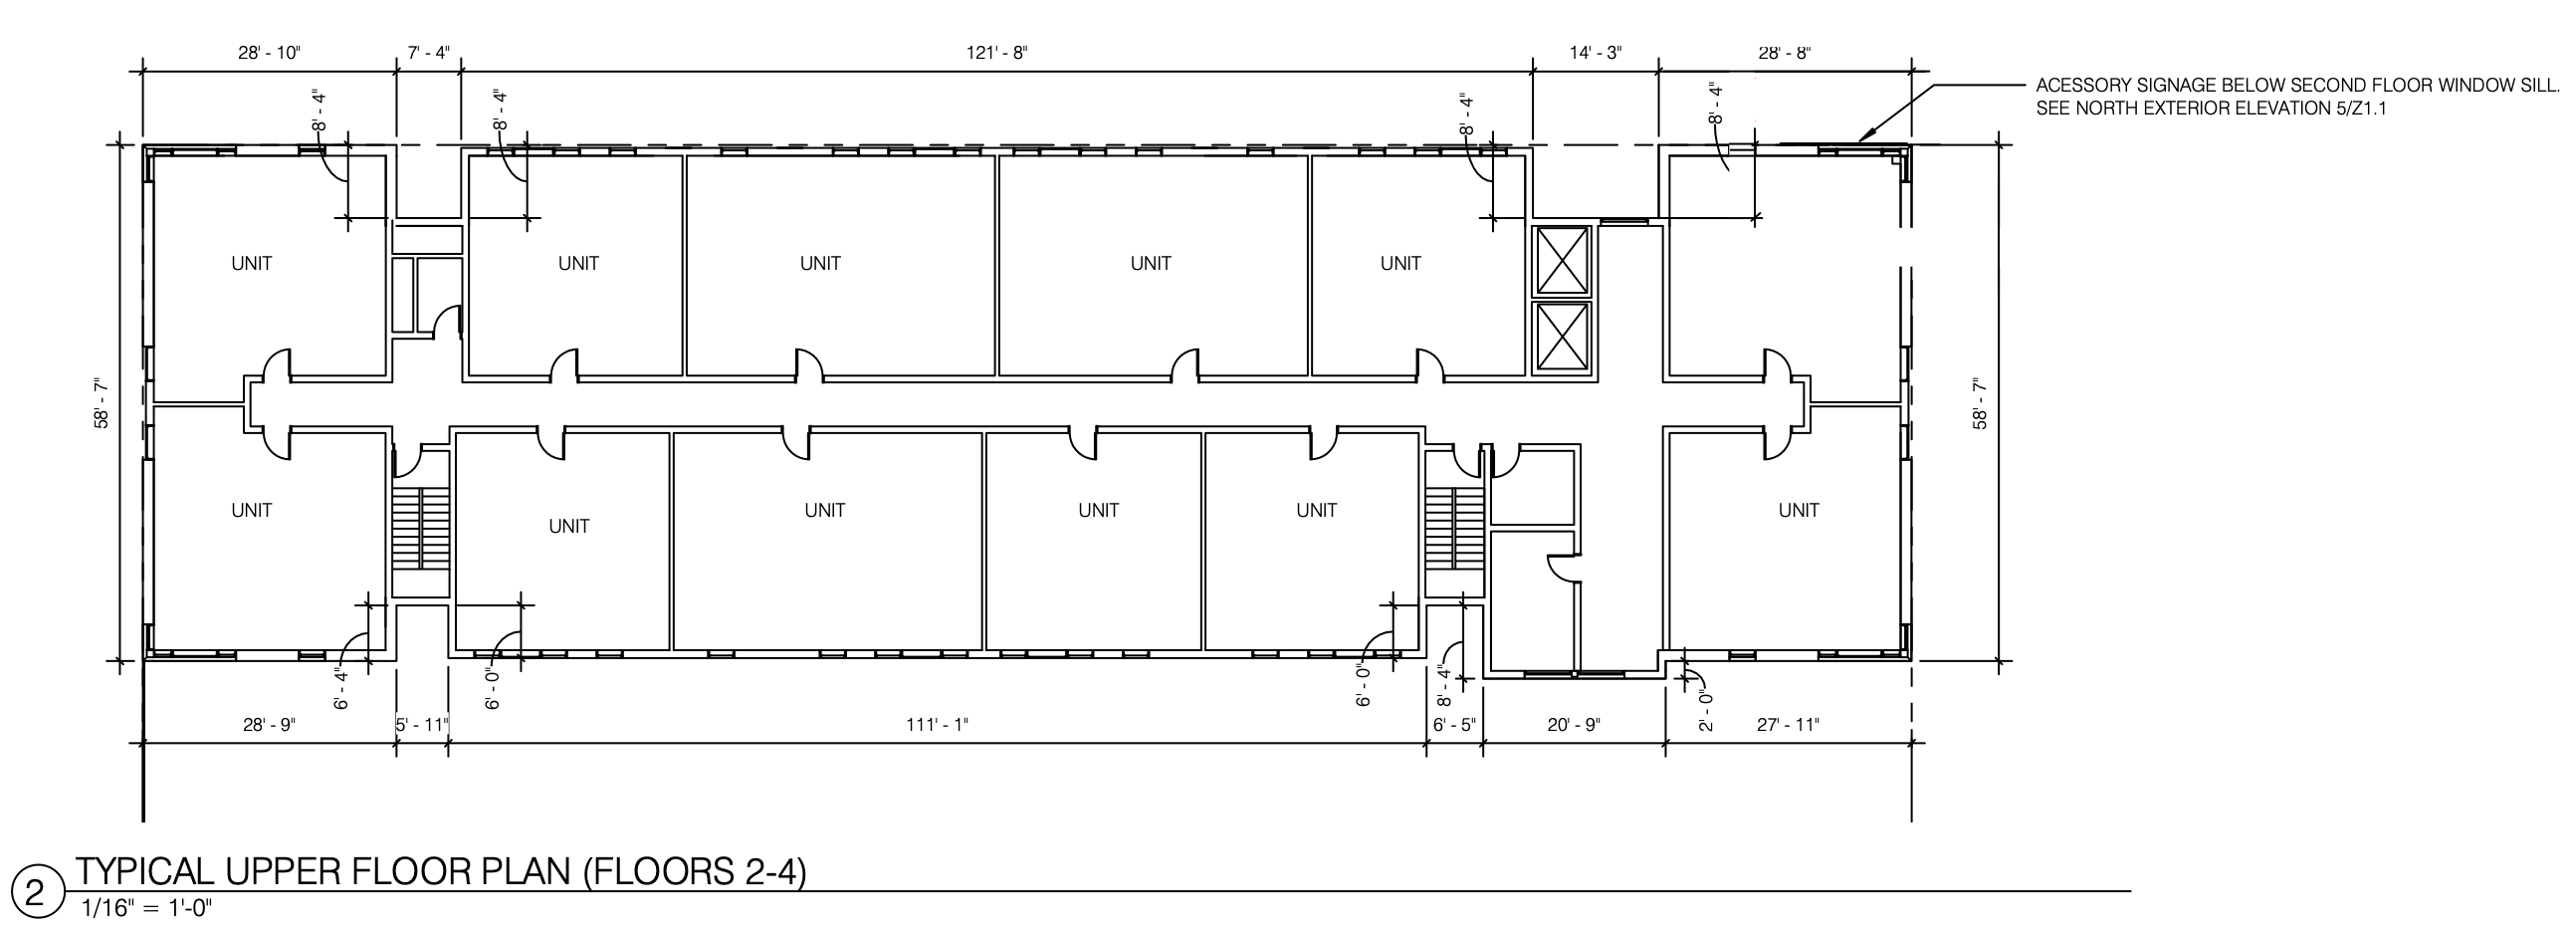 2721 Ruth Street Floor Plan (2-4 Floors)